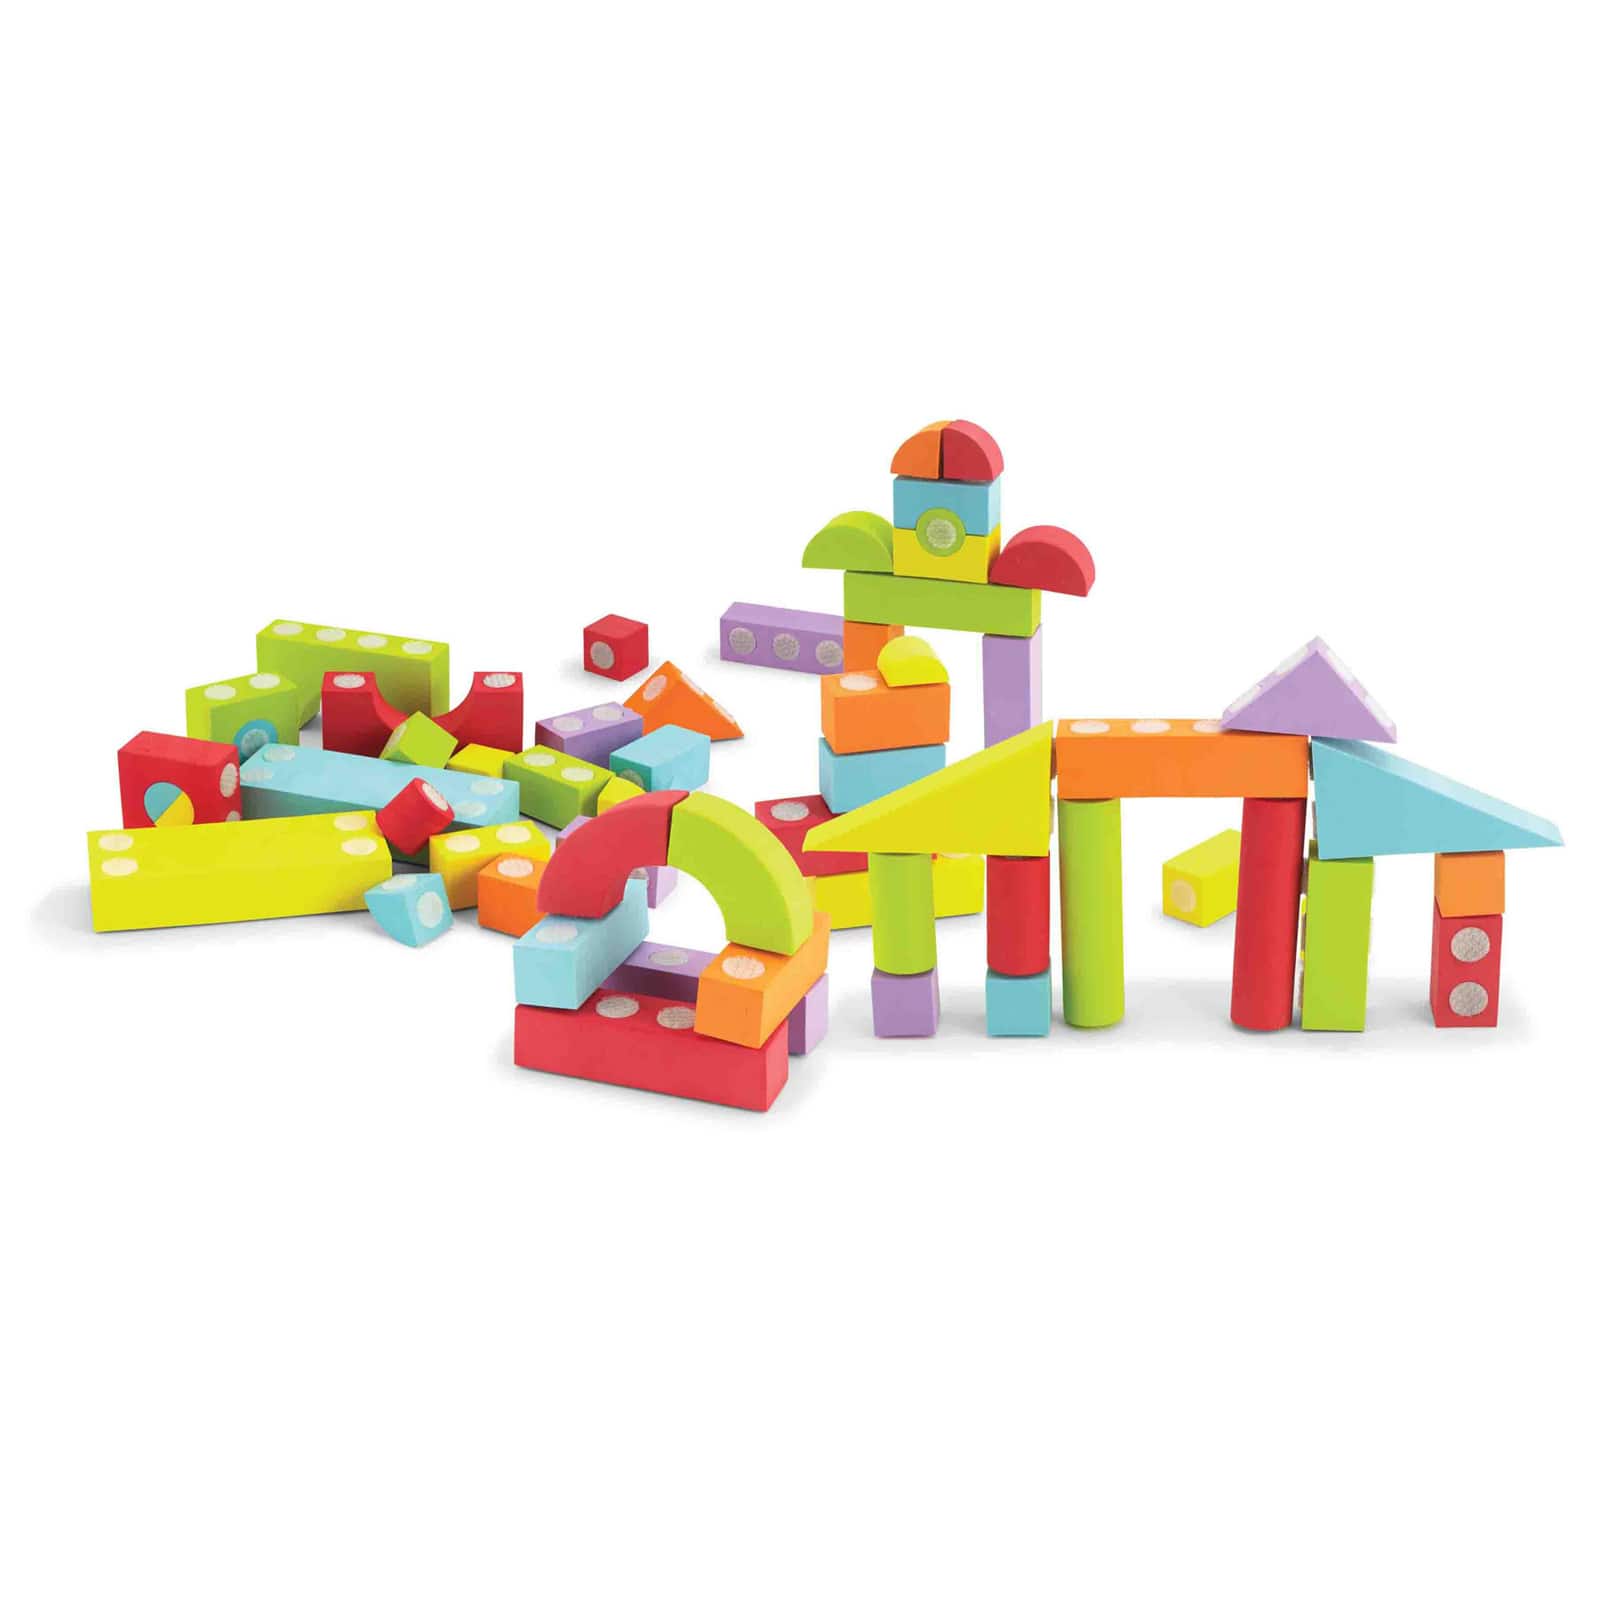 children's block sets